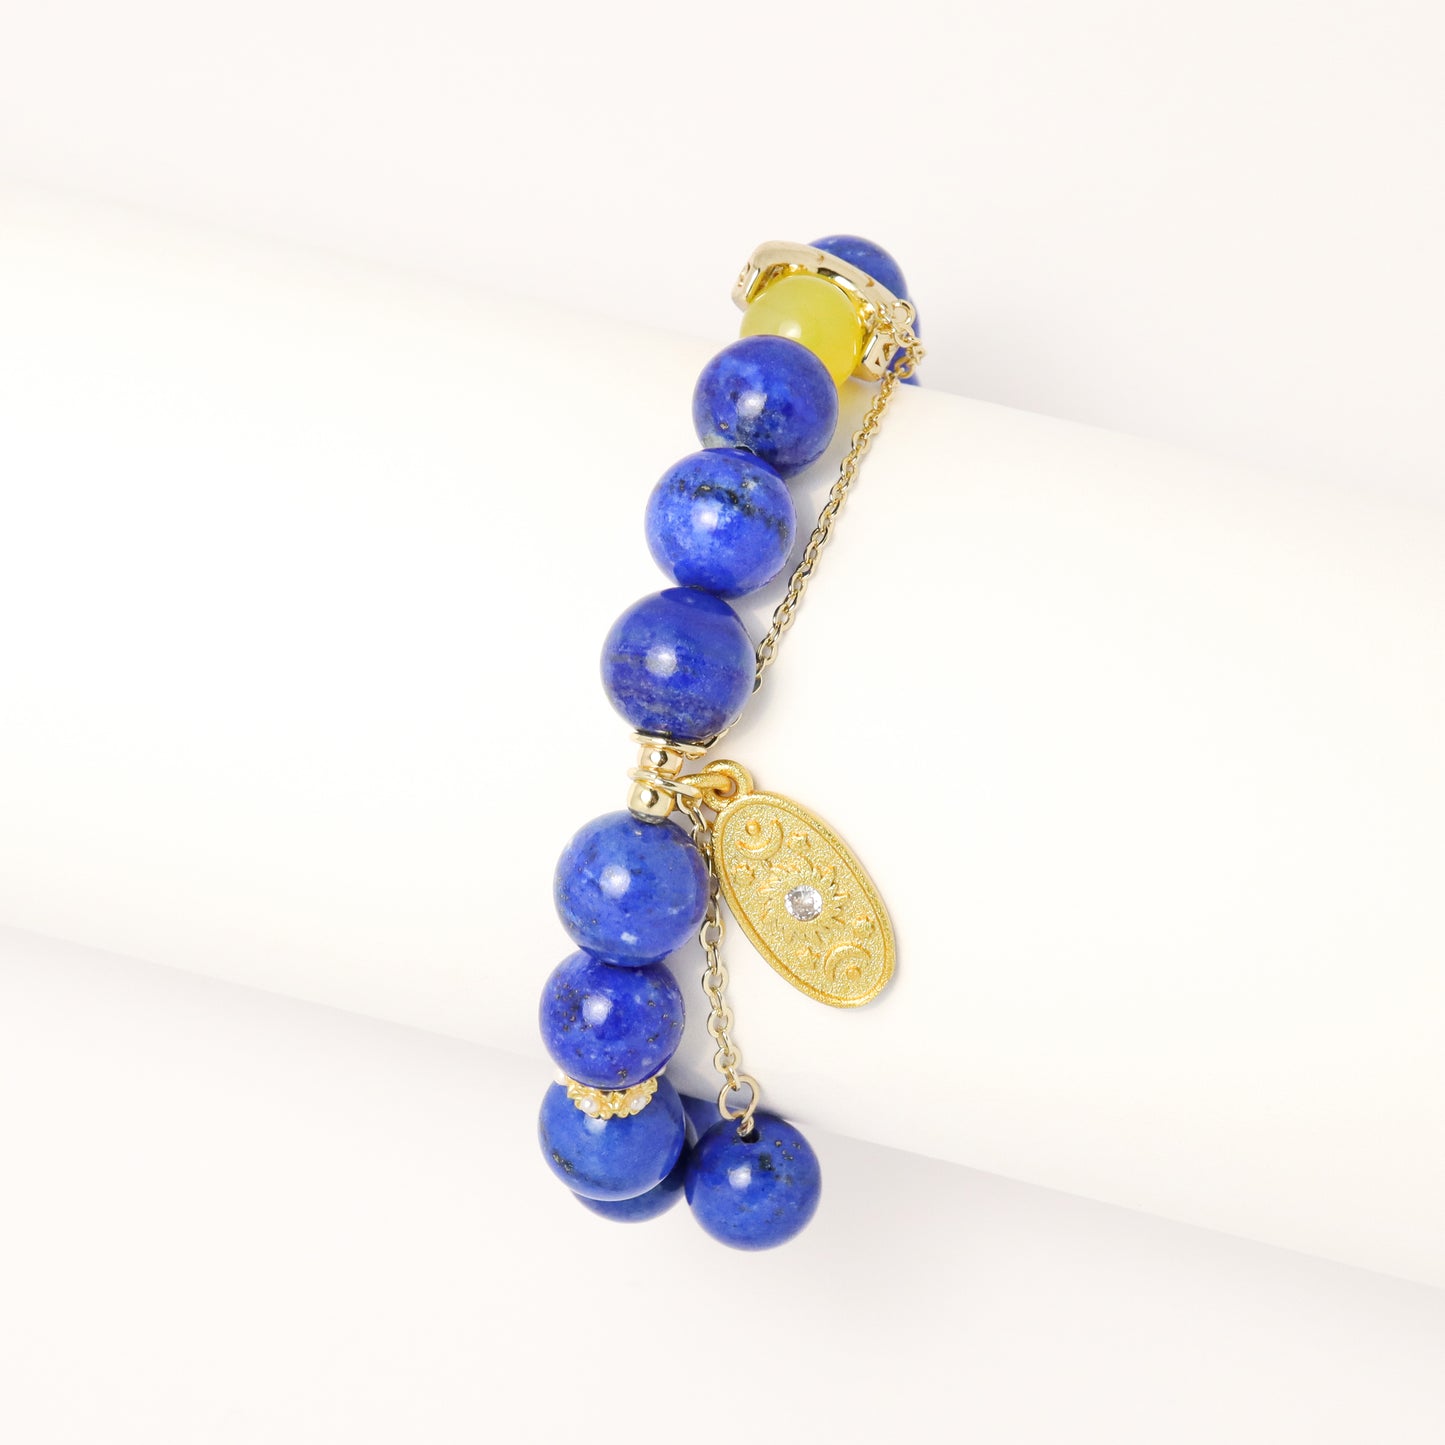 Meditate Day & Night - Lapis Lazuli Bracelet